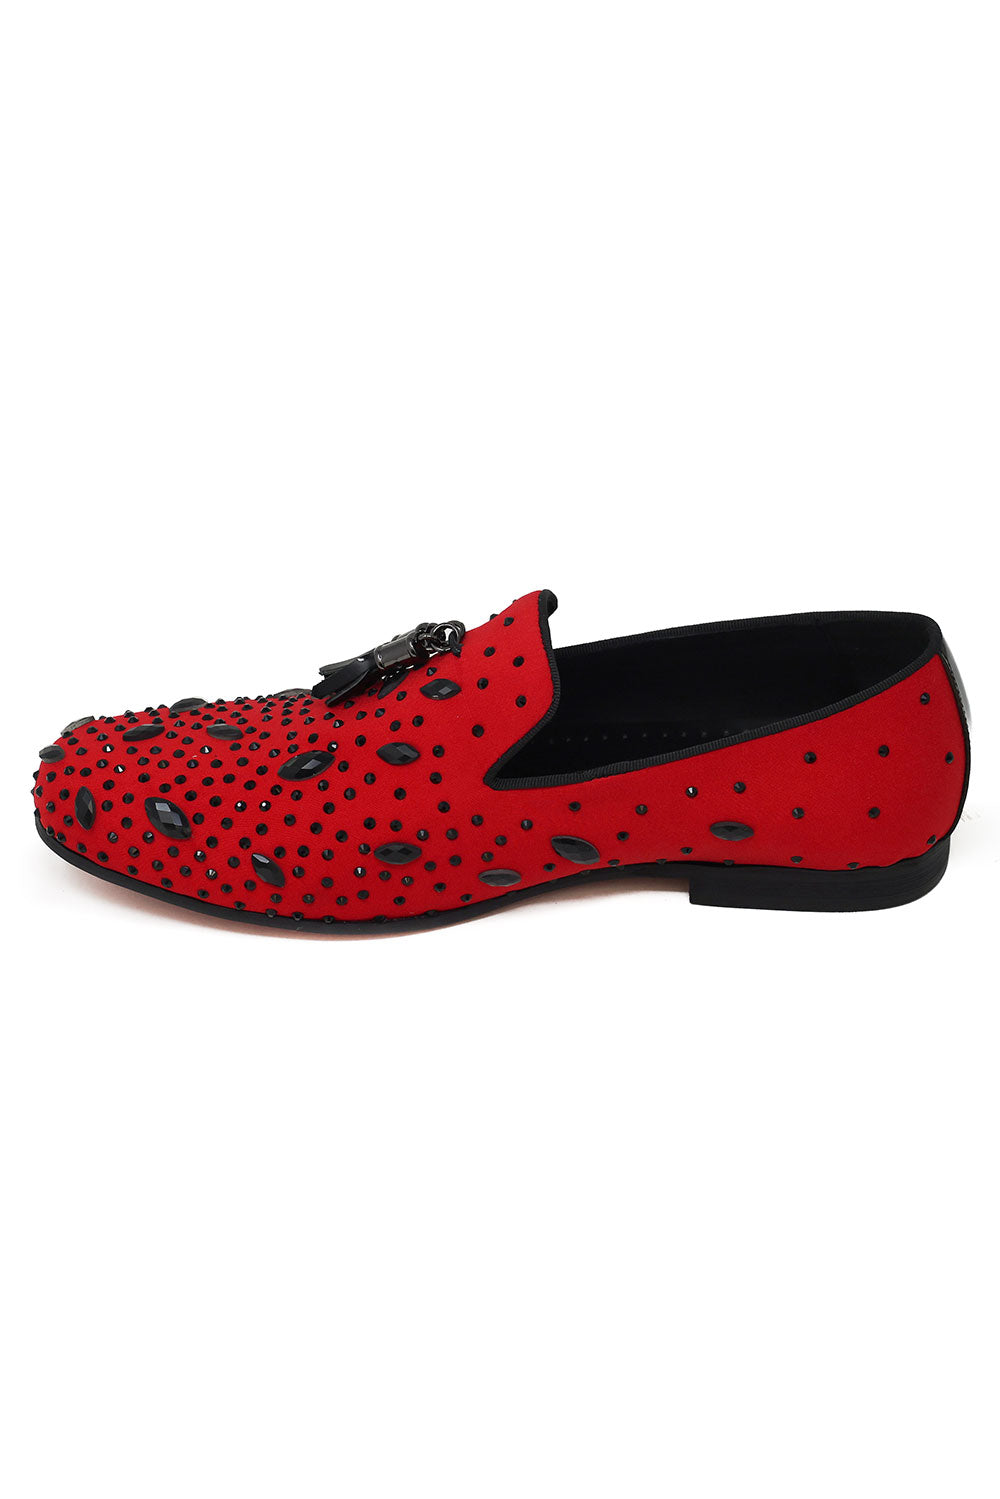 BARABAS Men's Rhinestone Diamond Tassel Loafer Dress Shoes SH3080 Red Black